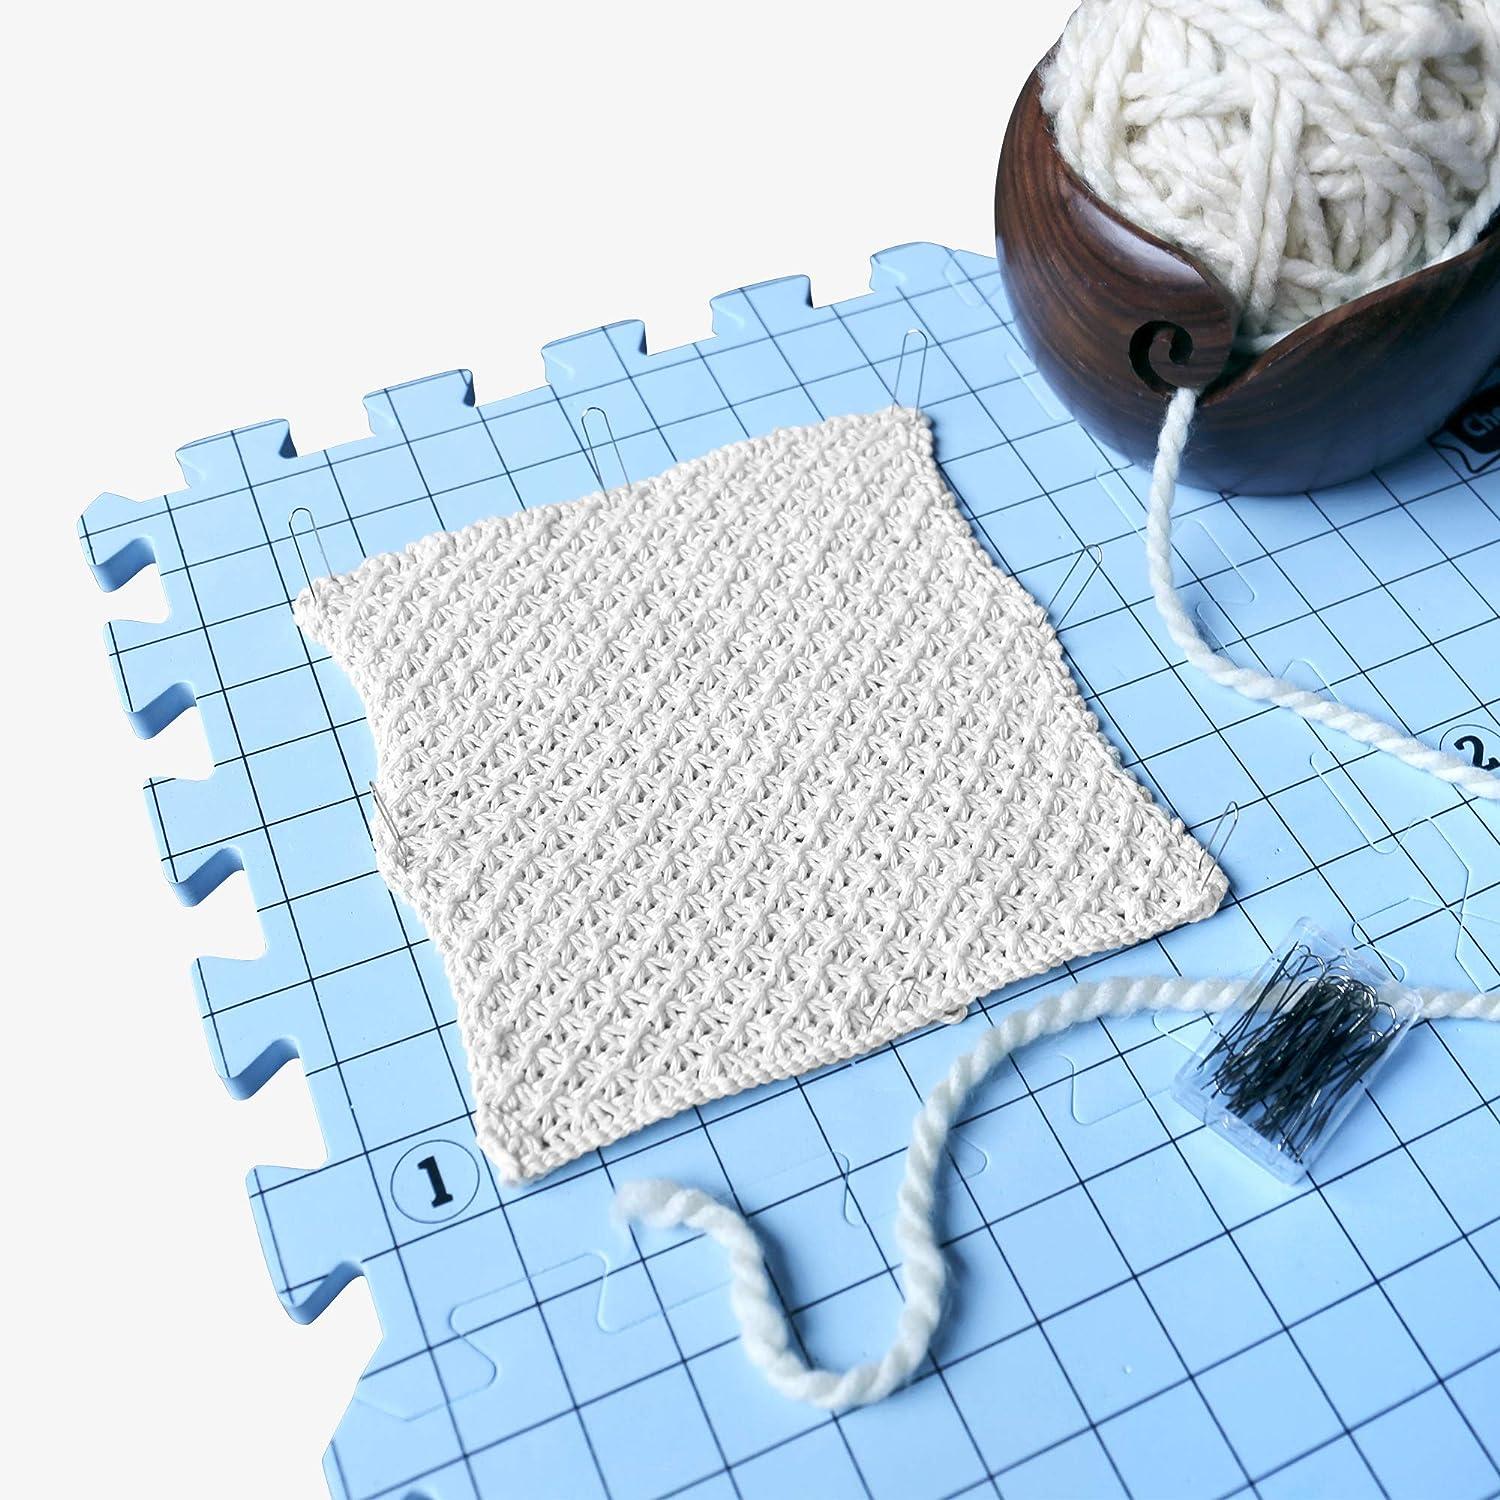 Knit Blocking Mats Blocking Knitting Board Foam Mats For Crochet